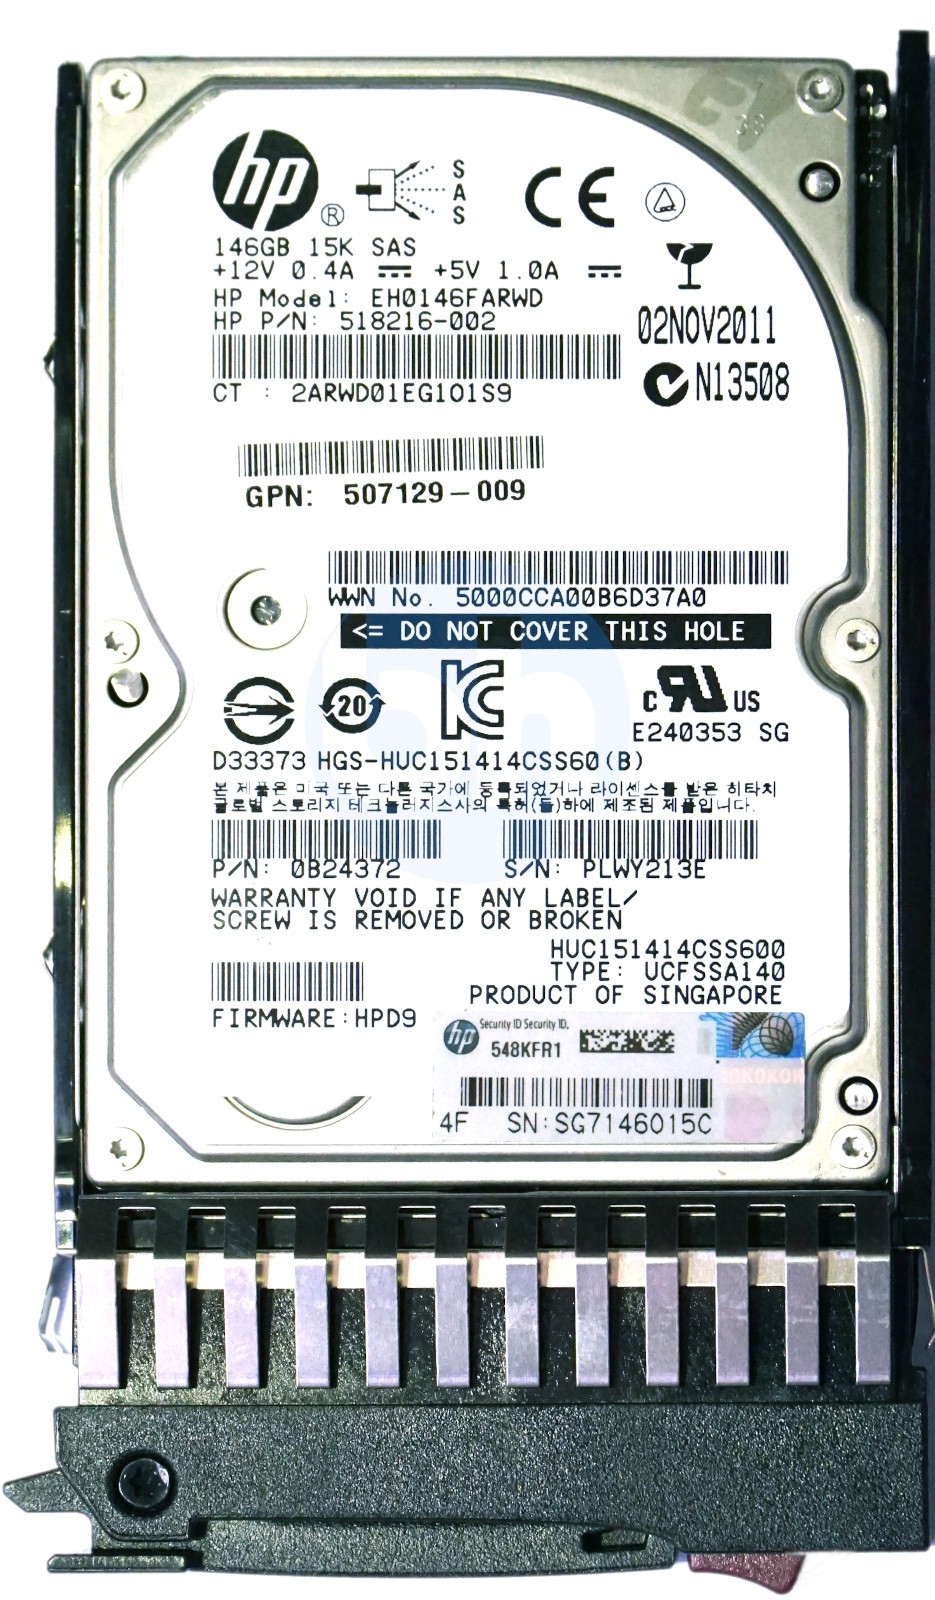 HP (518216-002) 146GB SAS-2 (SFF) 6Gb/s 15K in G5 Hot-Swap Caddy